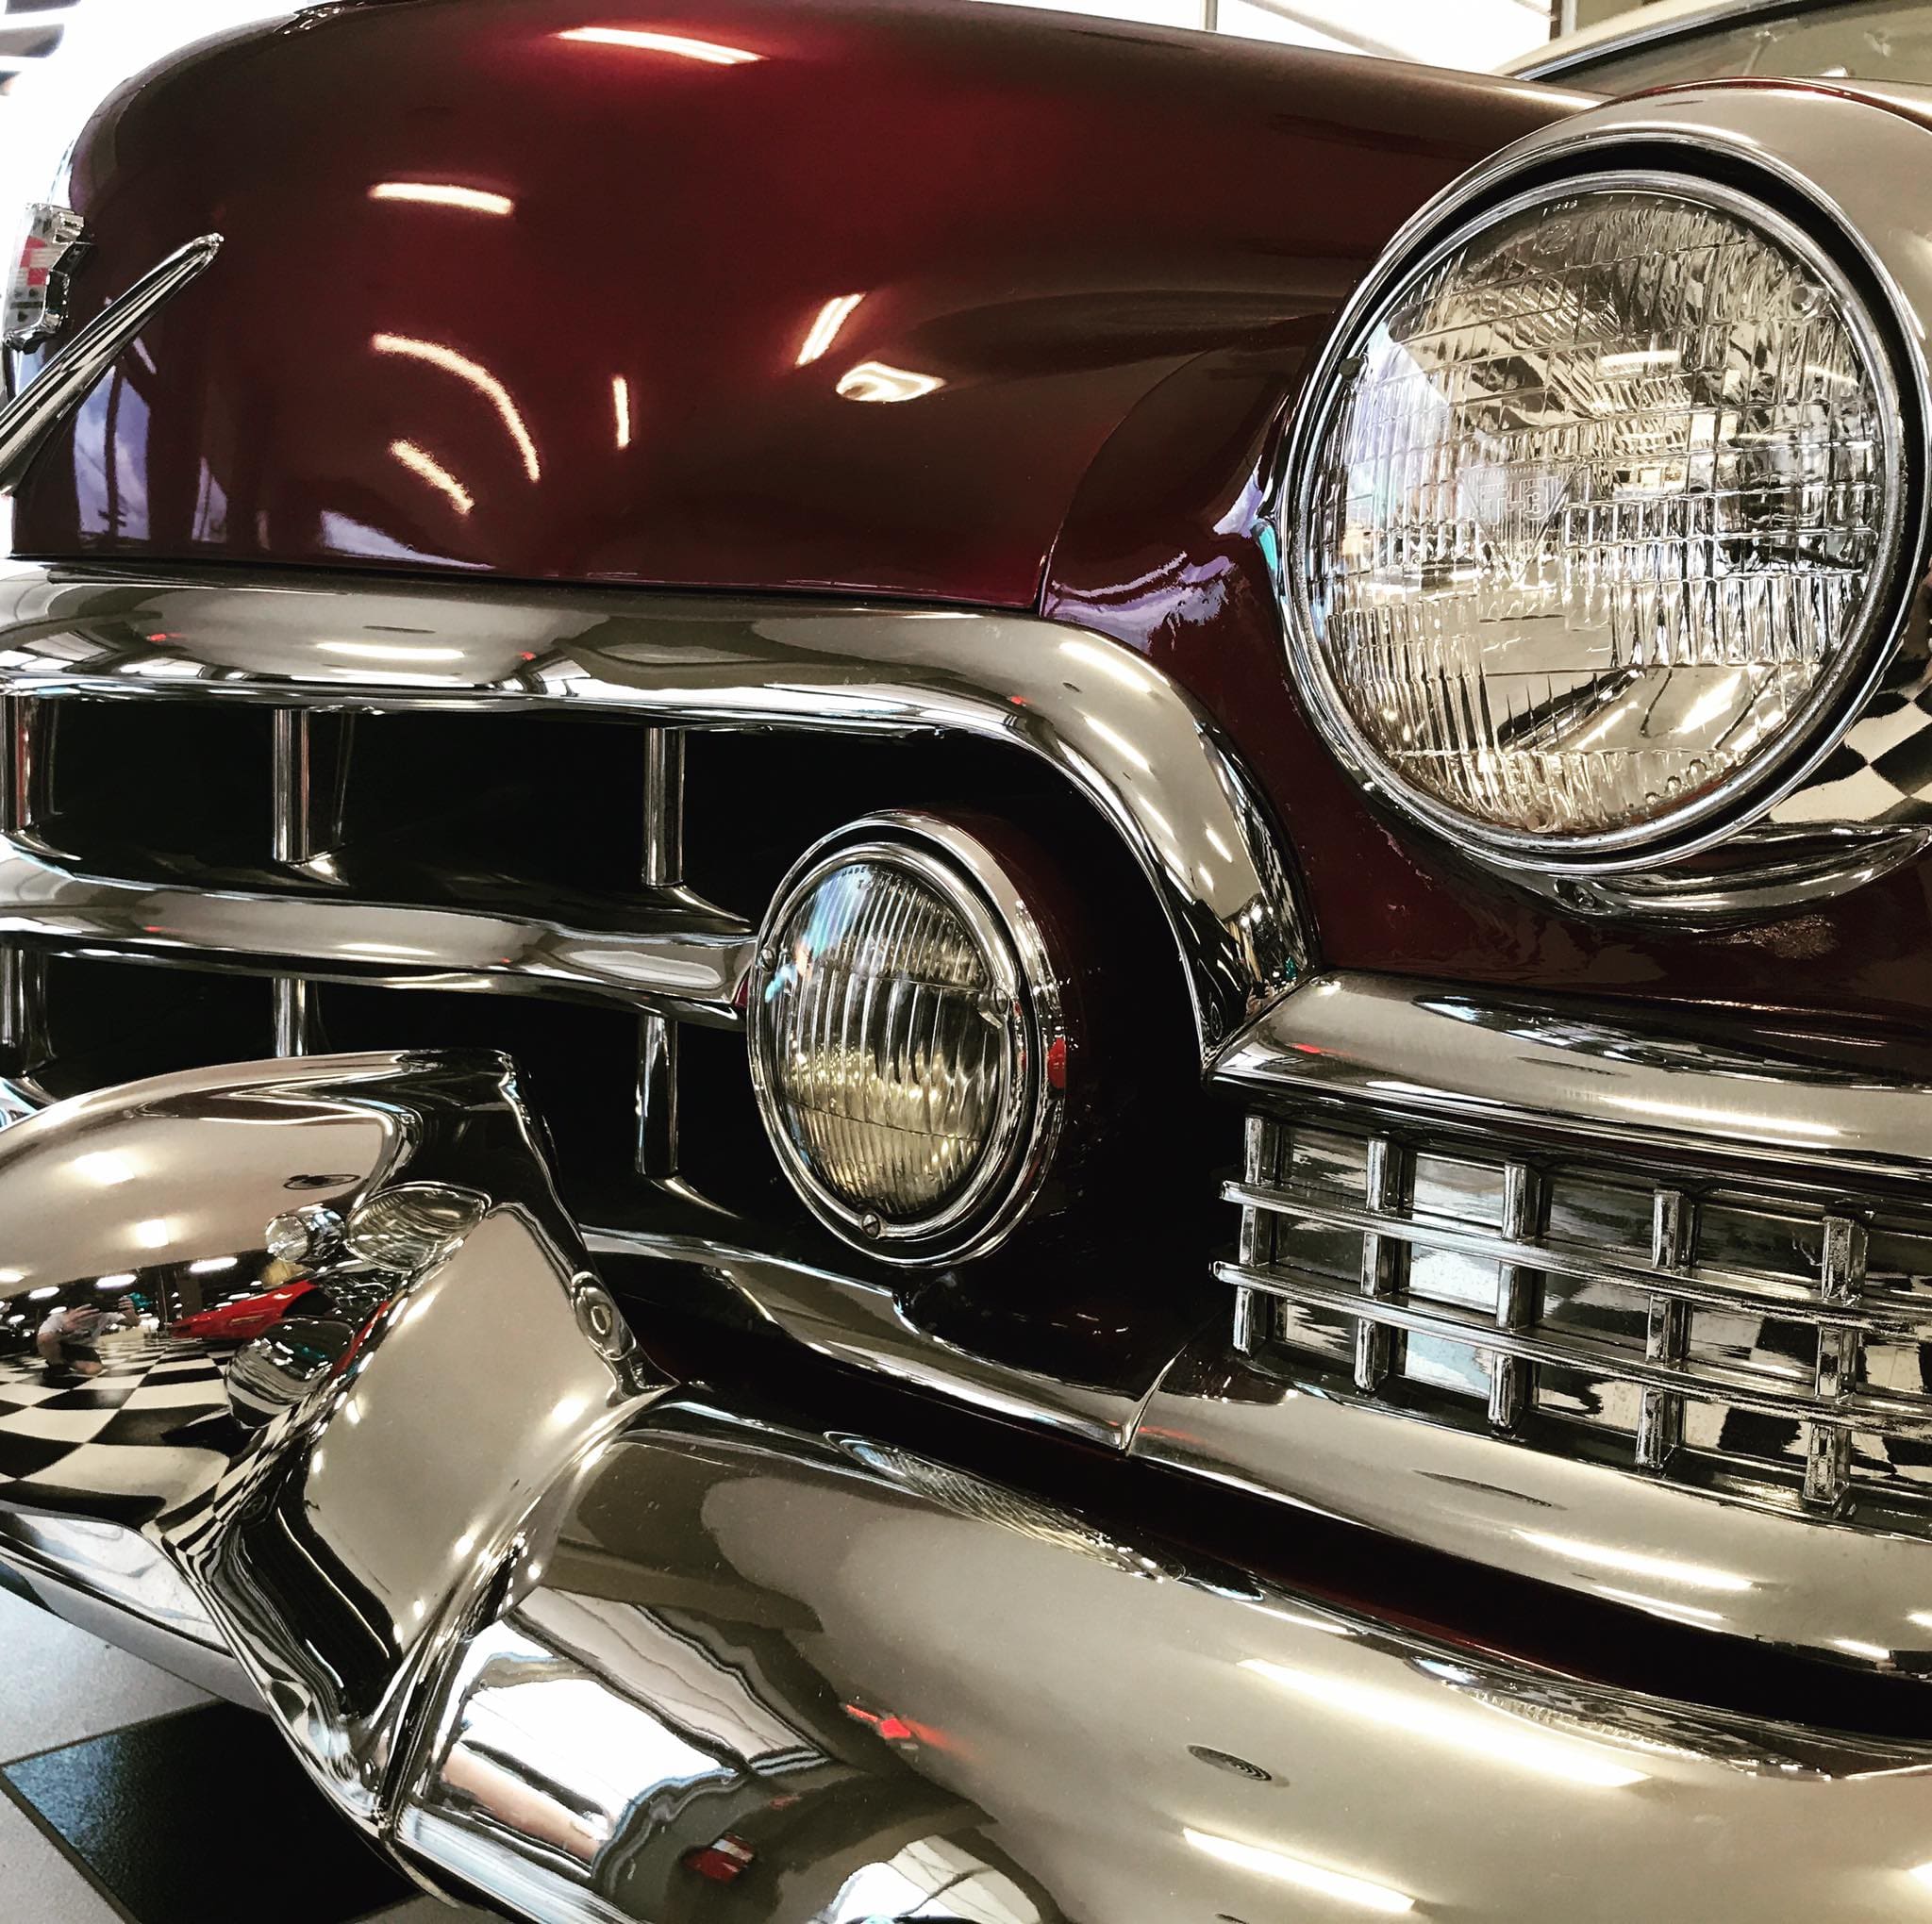 1951 Cadillac Fleetwood 75 | Miles Through Time